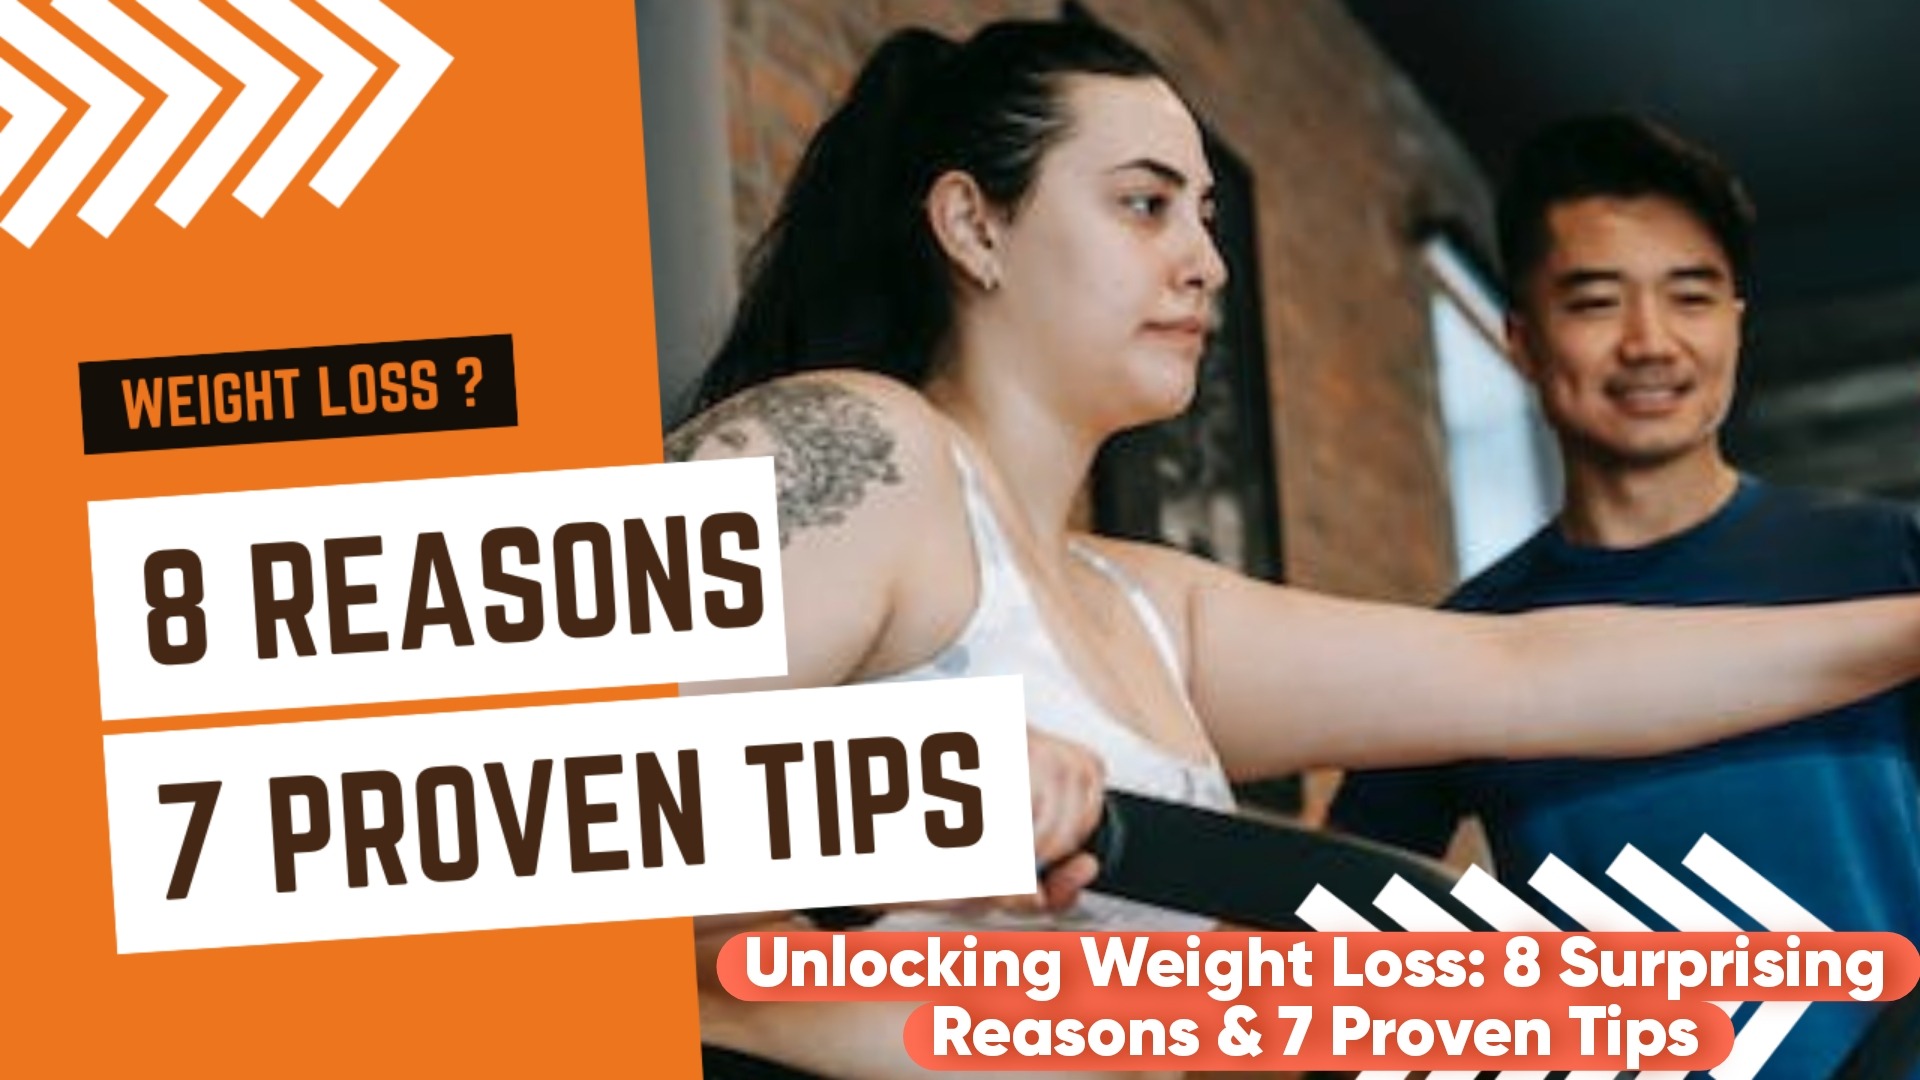 Unlocking Weight Loss: 8 Surprising Reasons & 7 Proven Tips